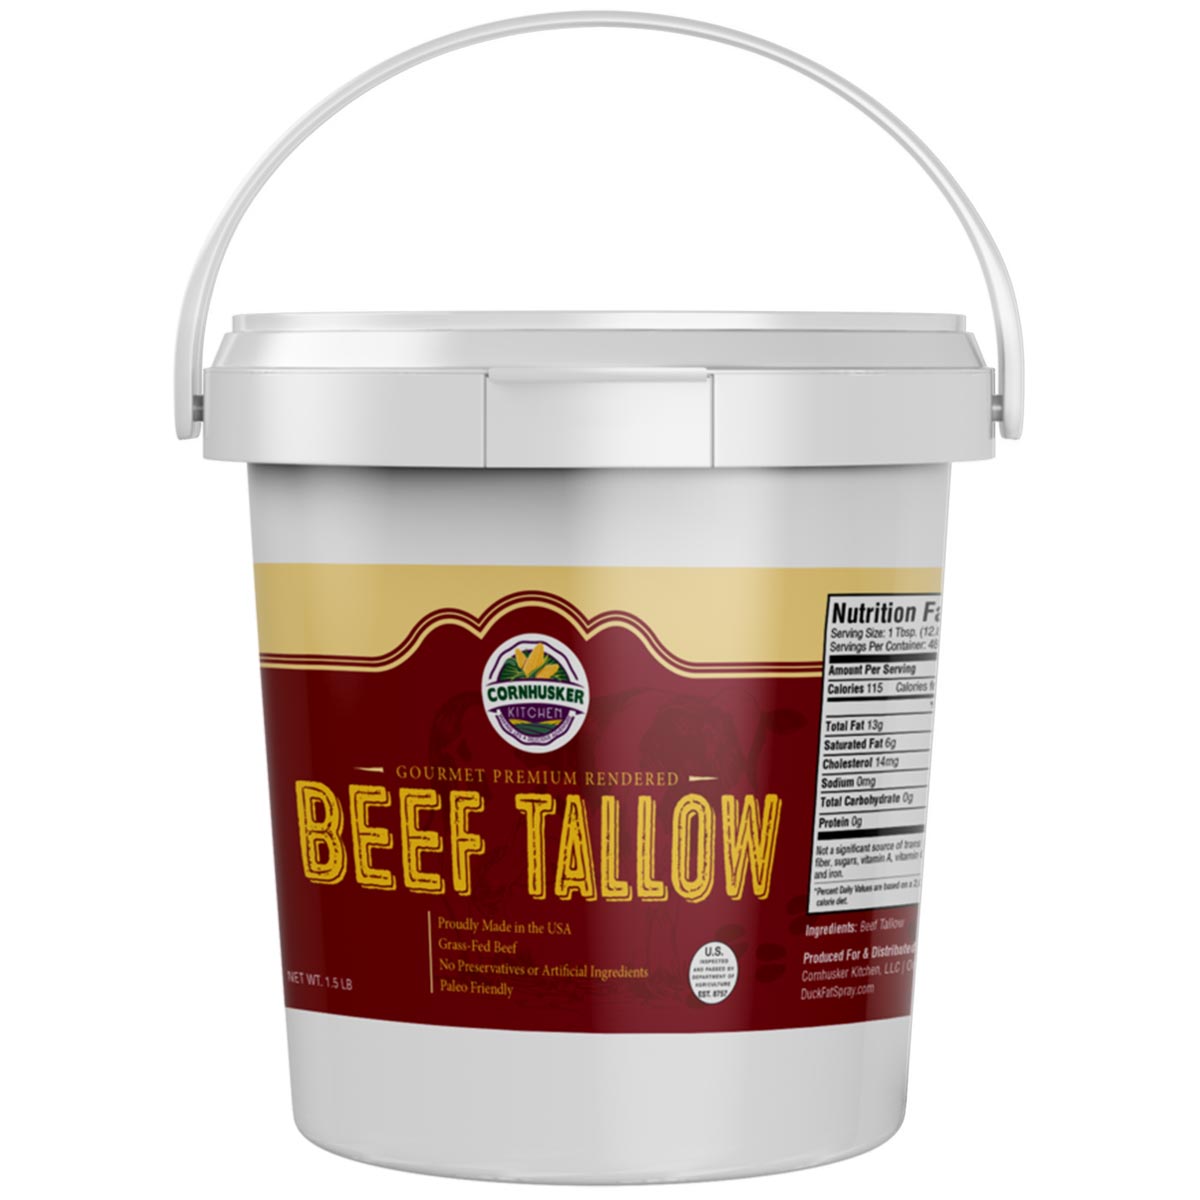 Premium Rendered BEEF TALLOW (1.5lb tub)